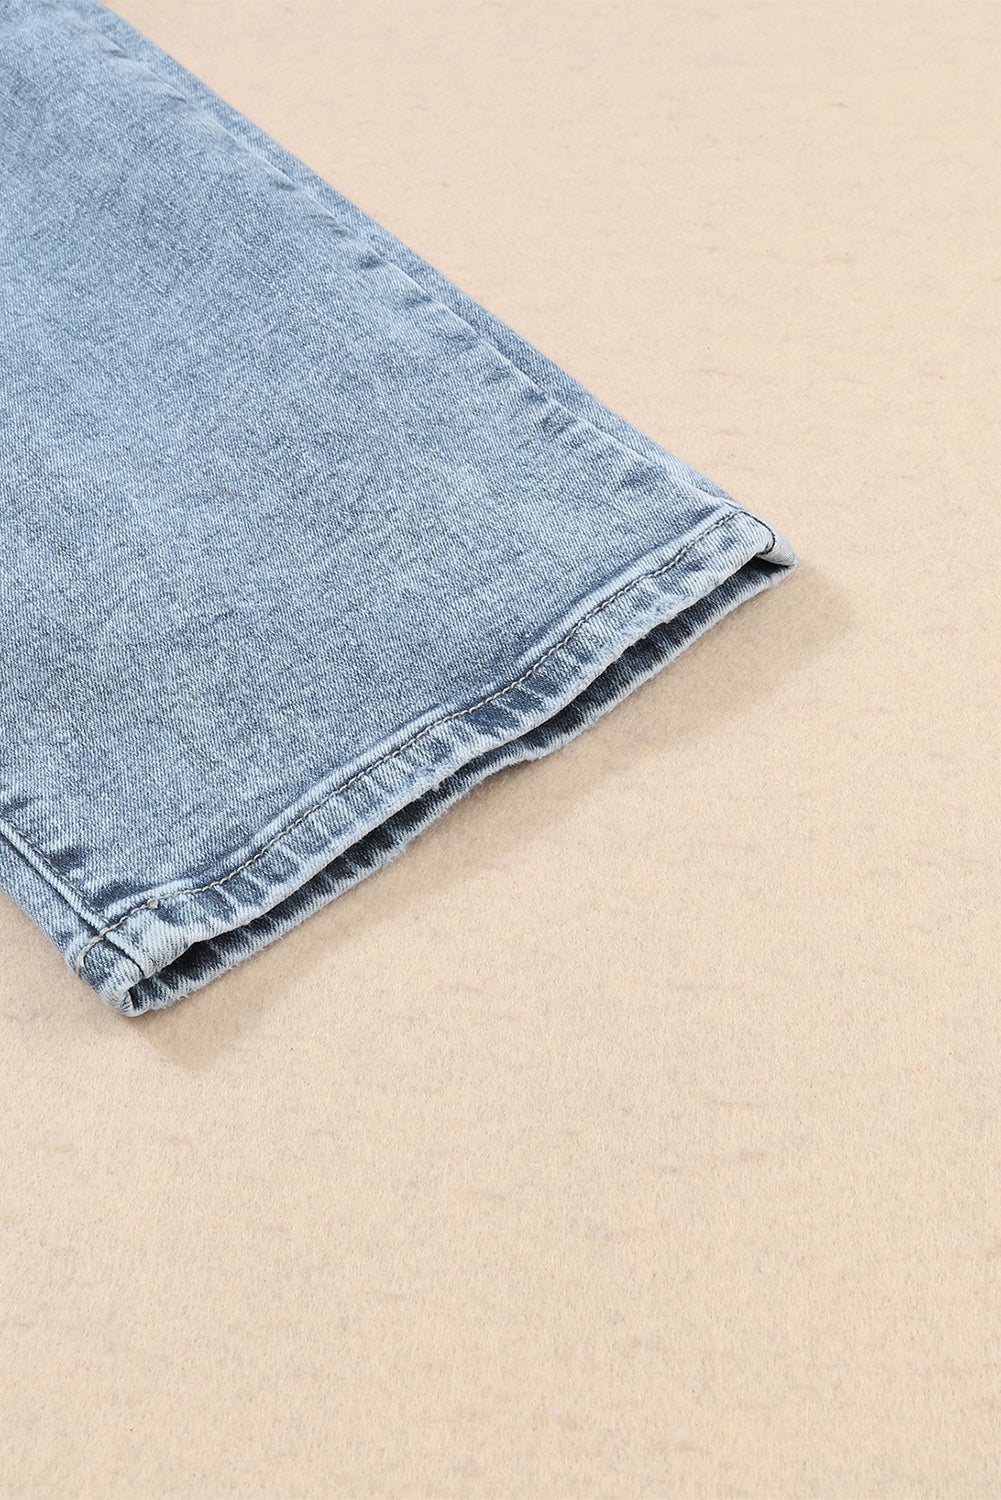 Navy Blue Light Wash Frayed Slim Fit High Waist Jeans